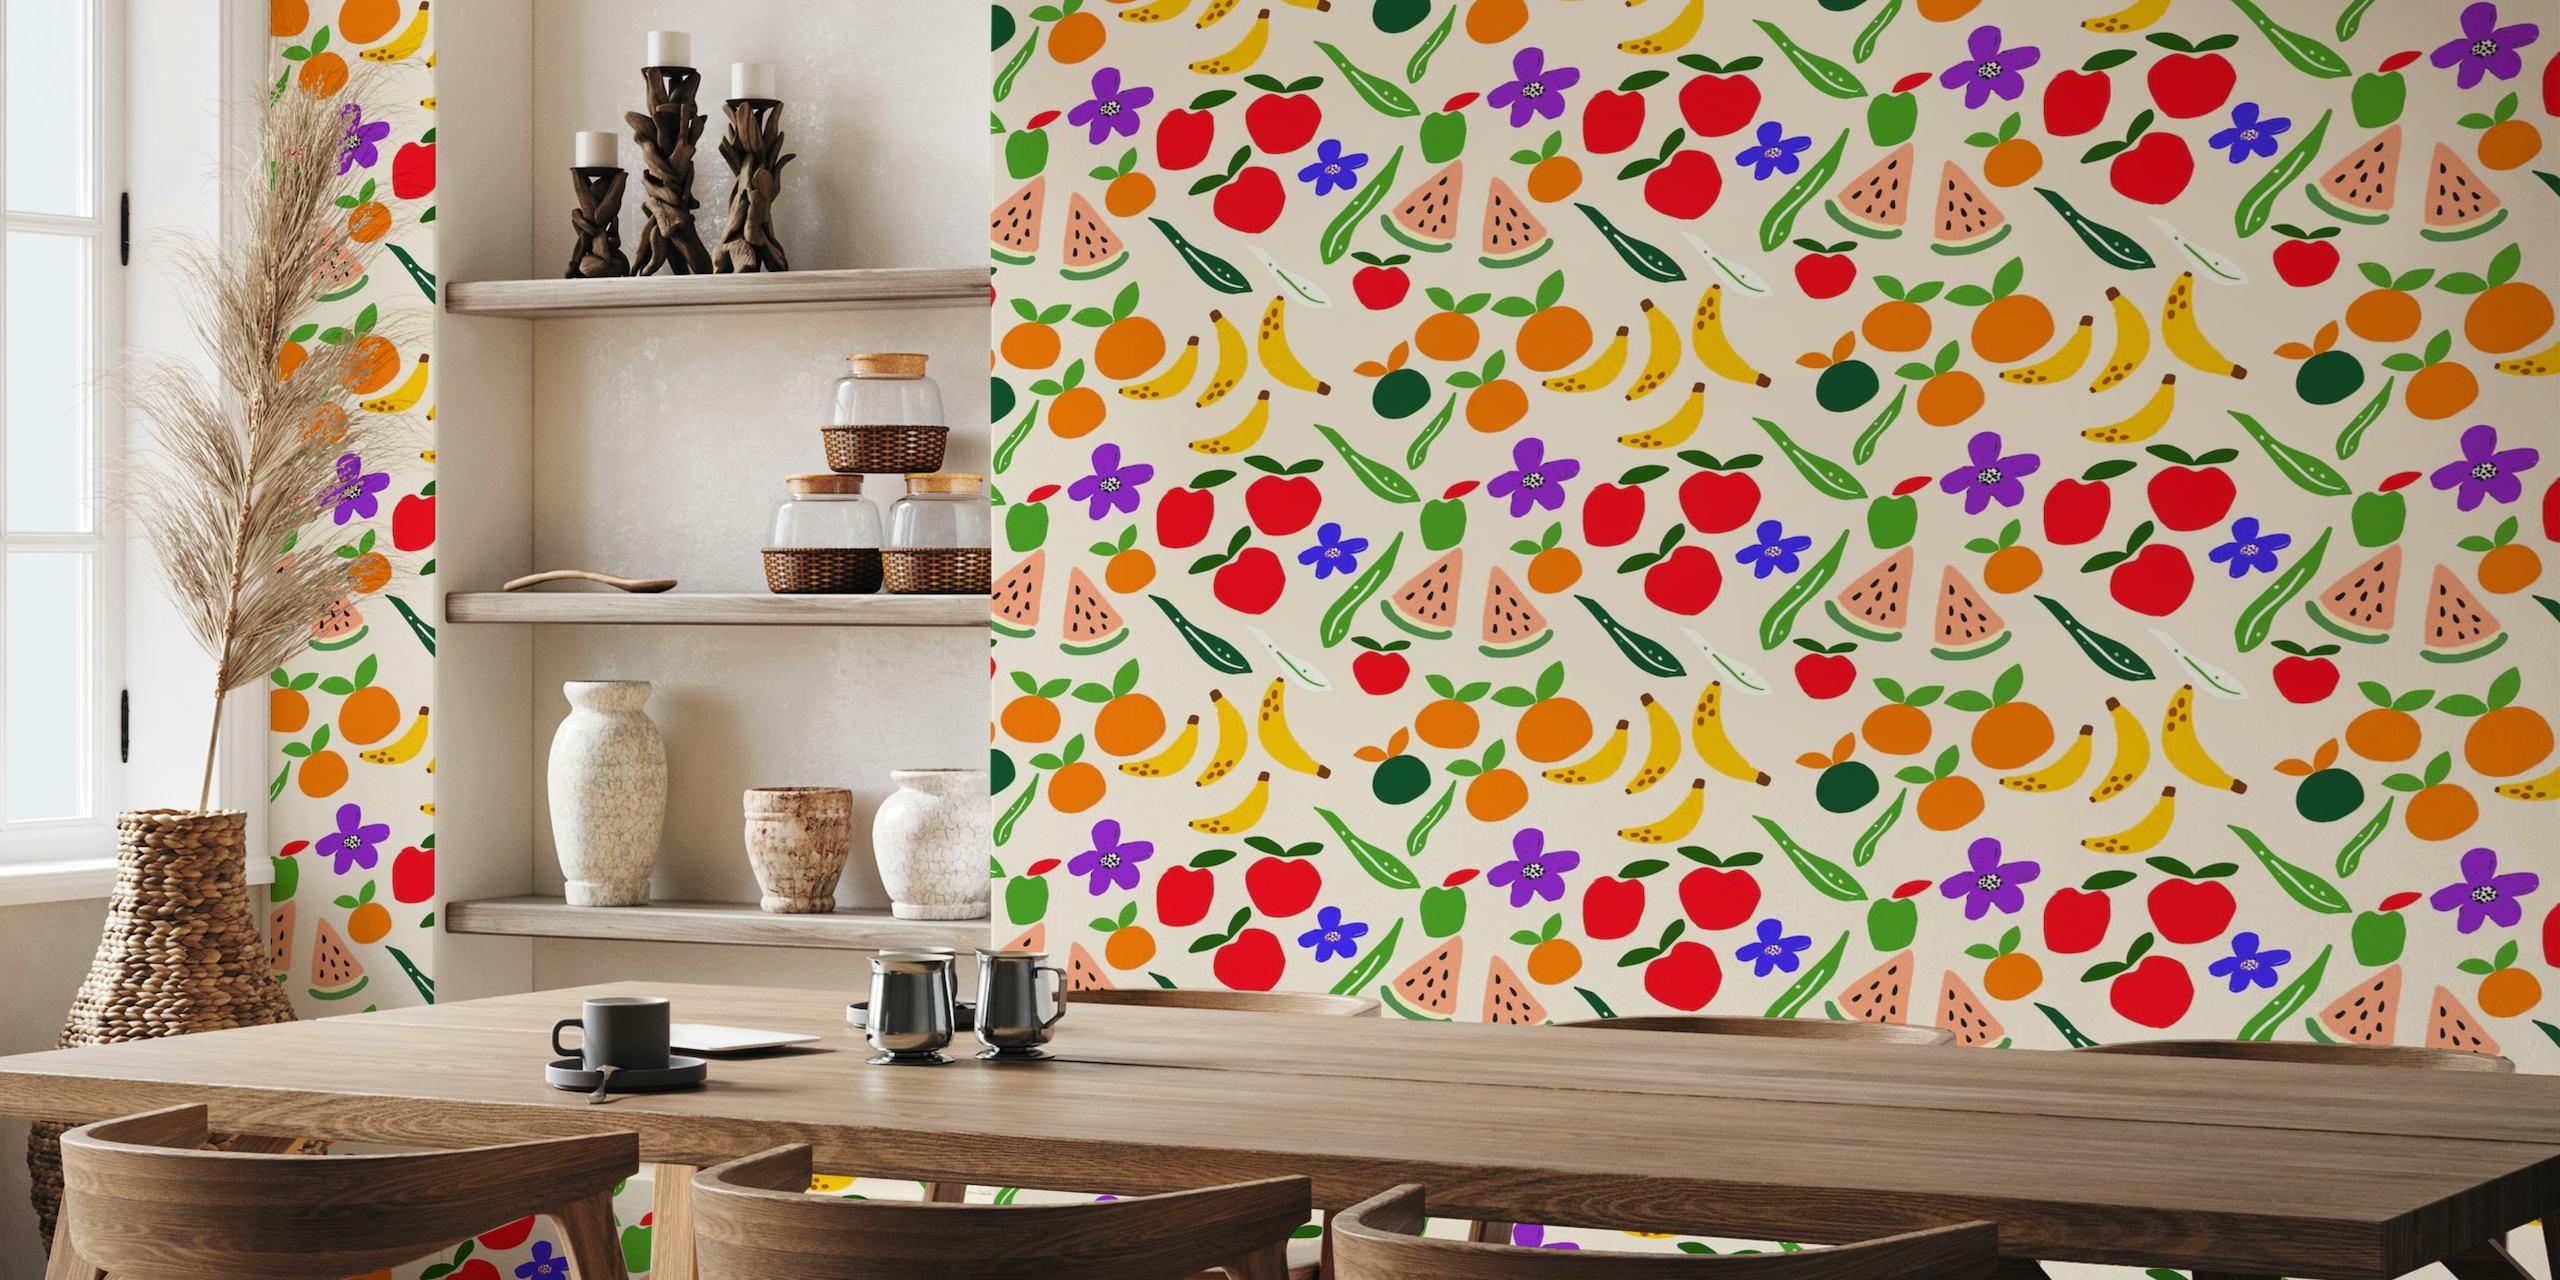 Fruit Salad Surprise wallpaper